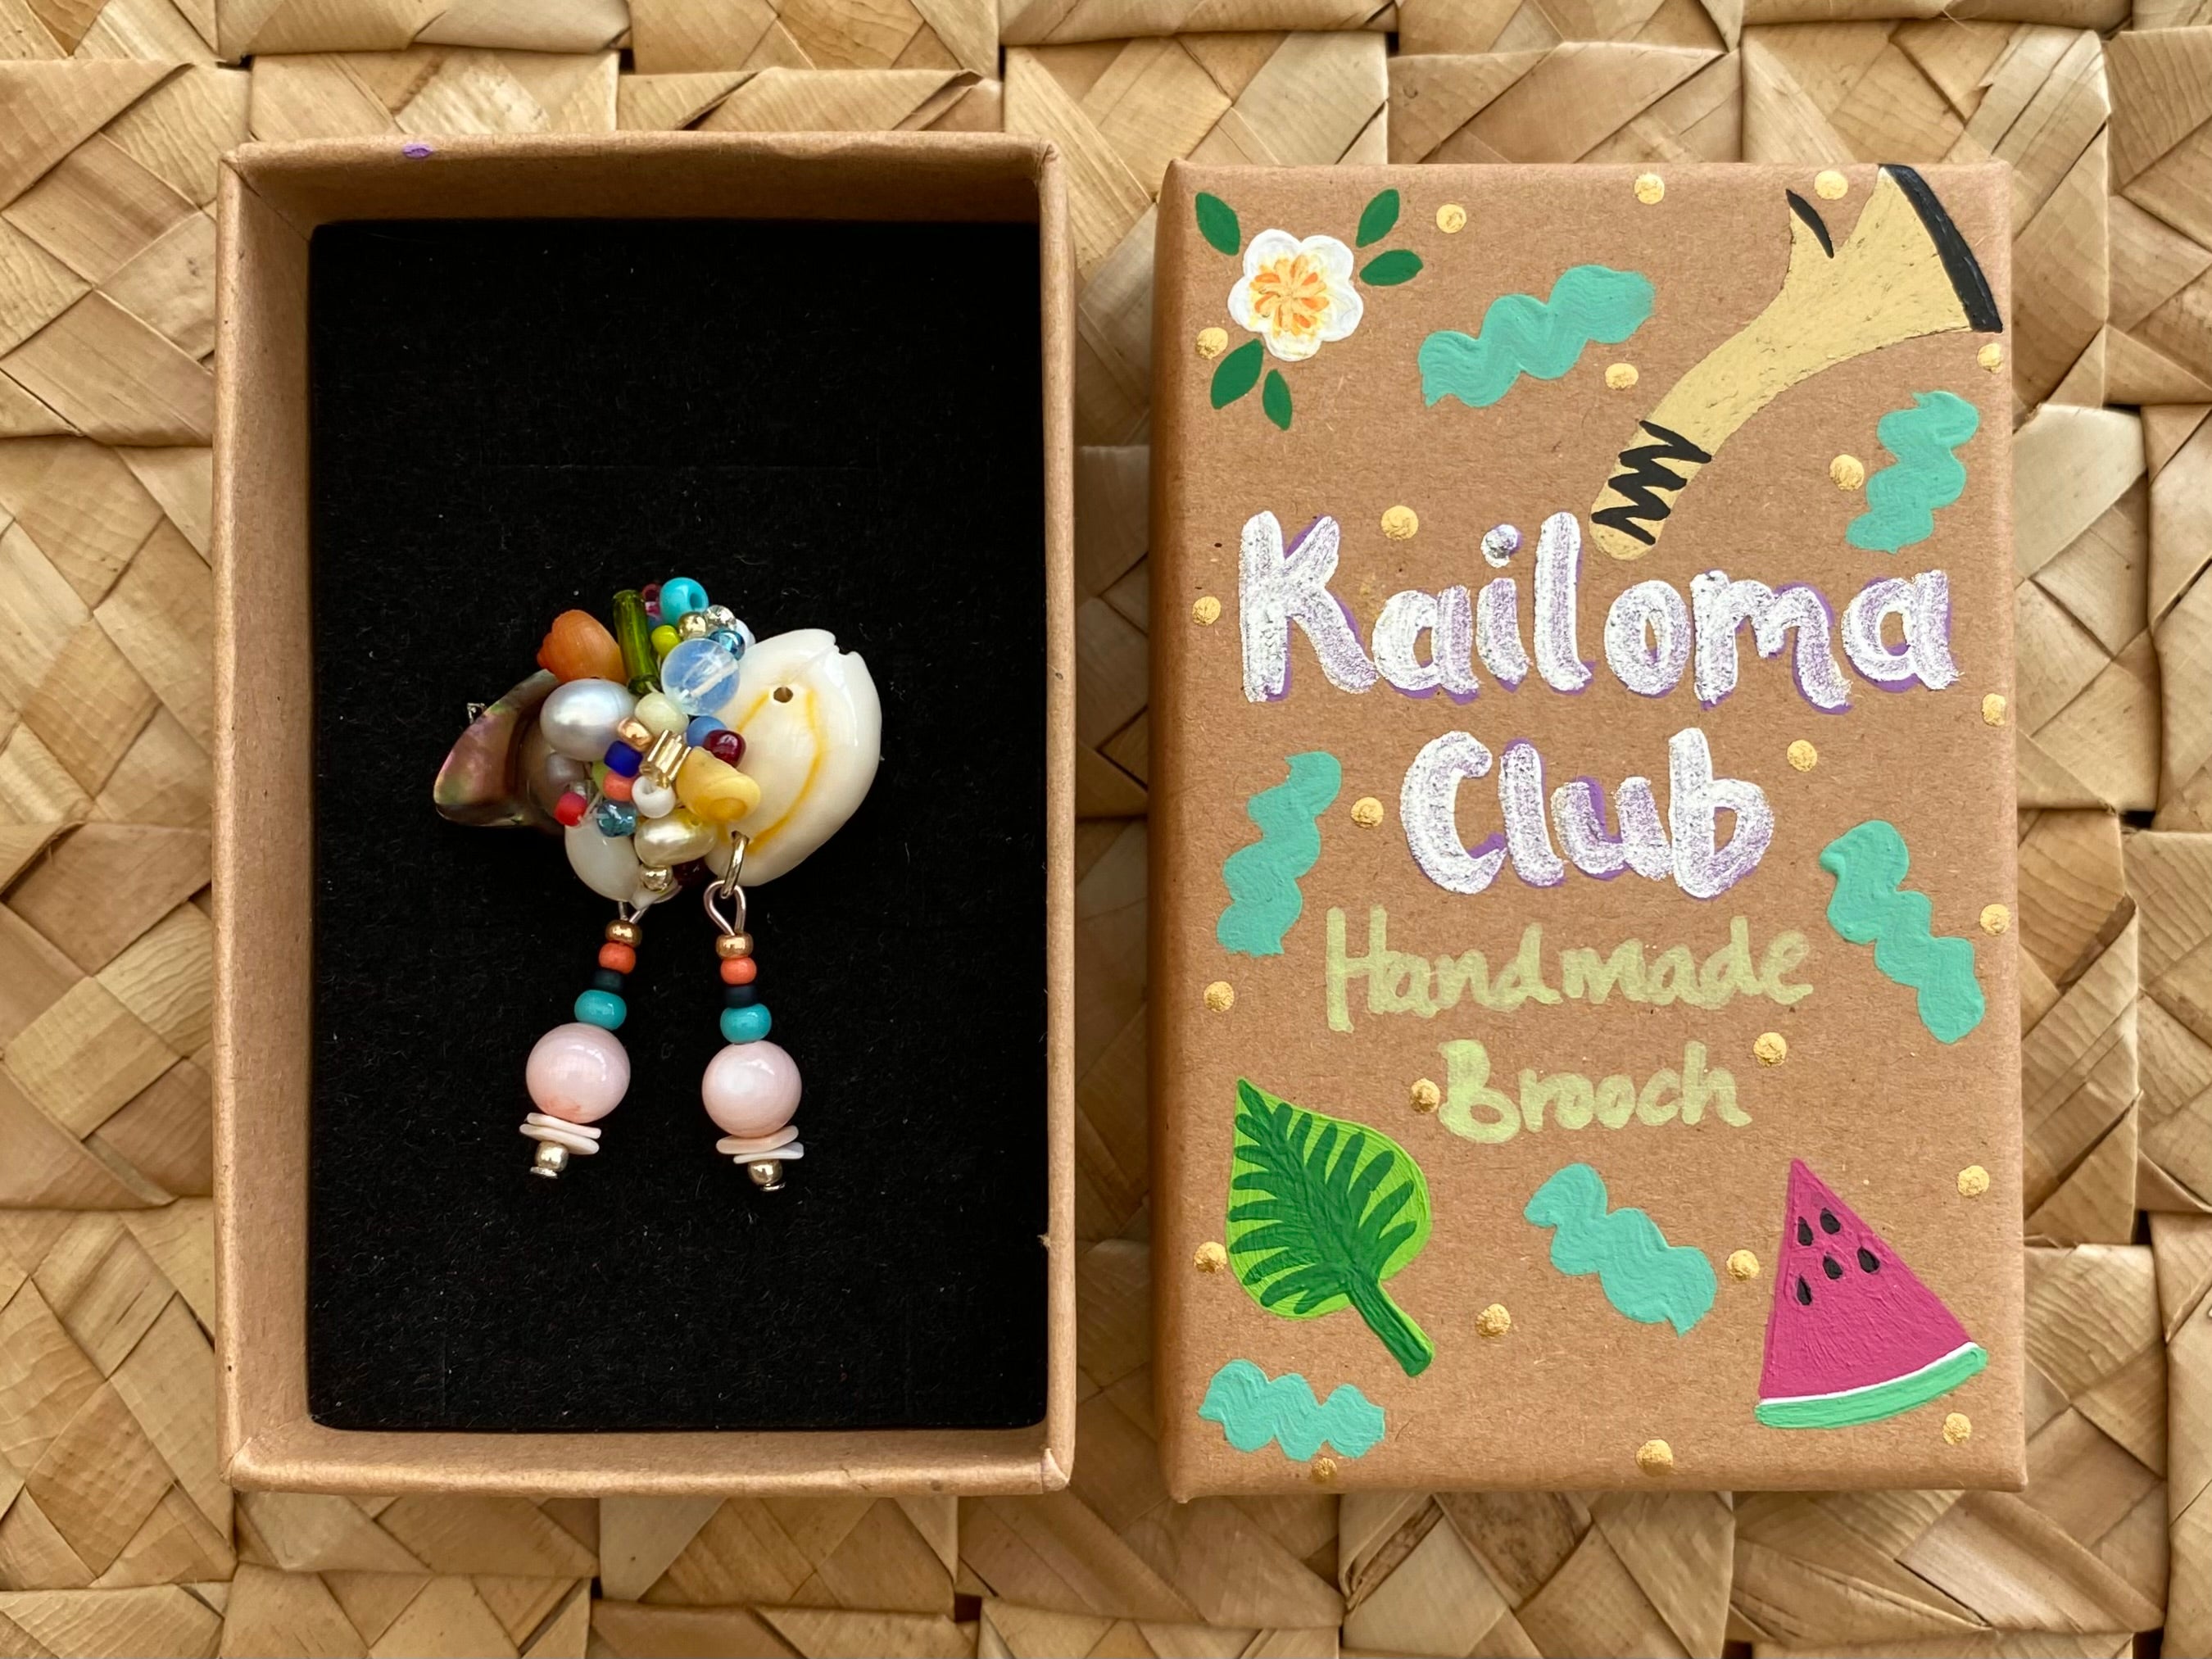 Kailoma Club Handmade Brooch #7